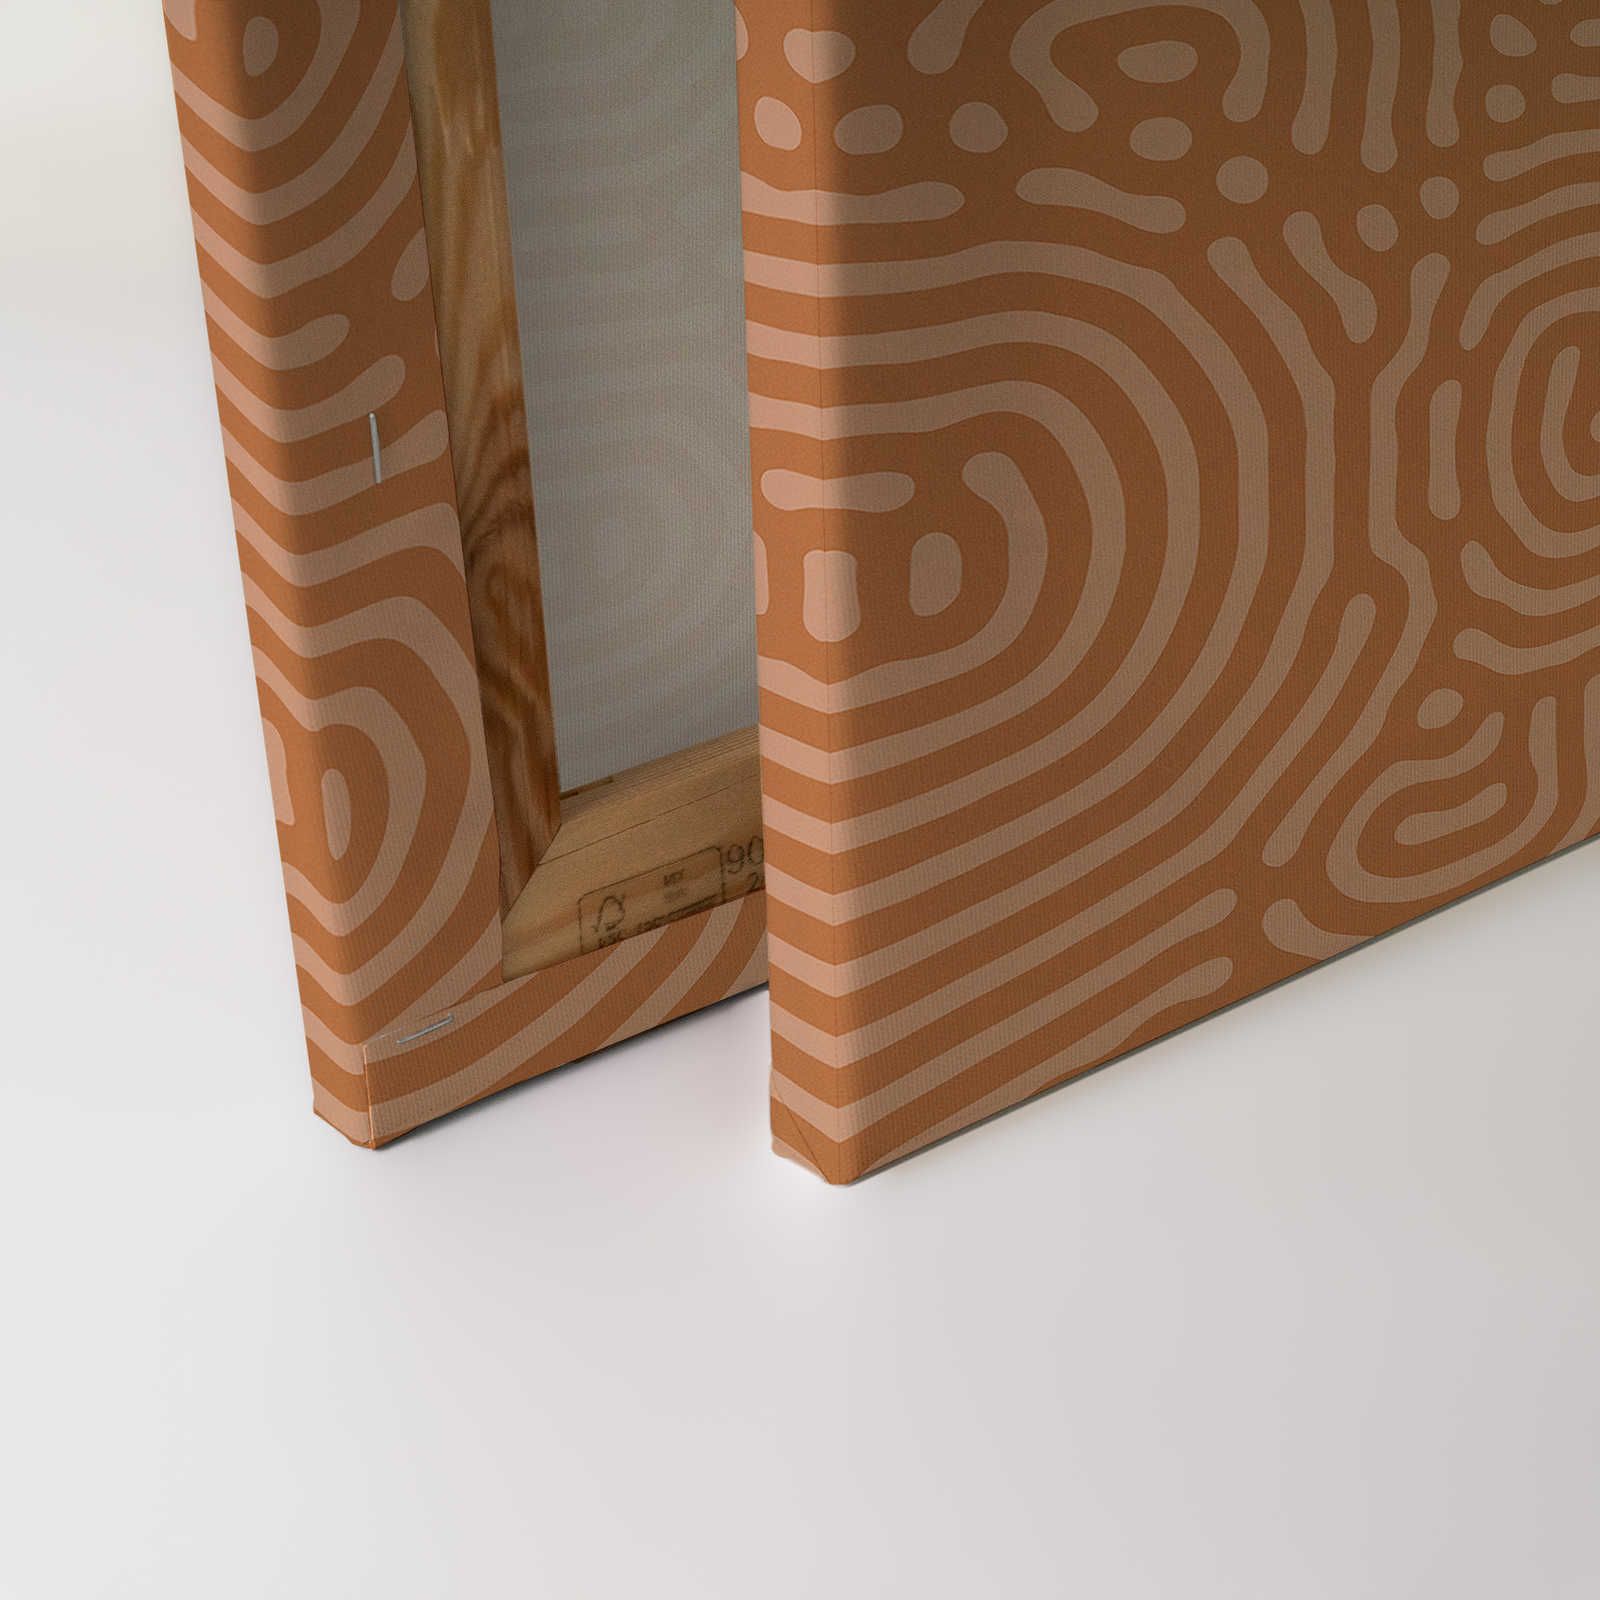             Sahel 2 - Oranje Canvas Schilderij Labyrint Patroon Terracotta - 1.20 m x 0.80 m
        